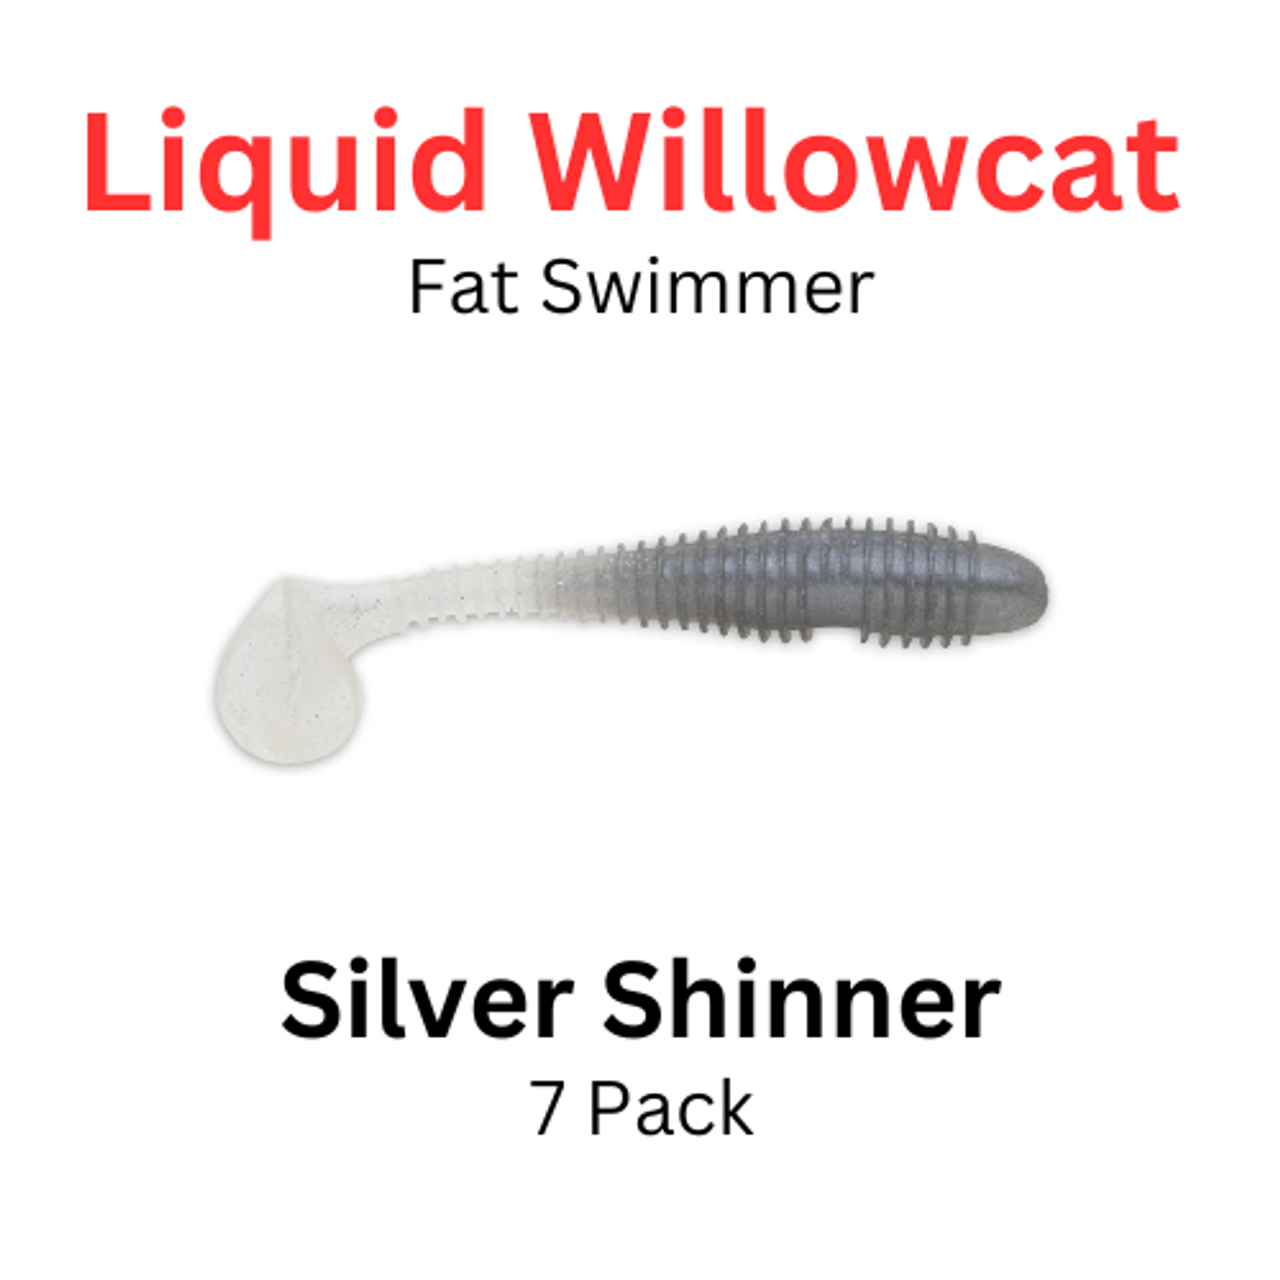 LIQUID WILLOWCAT Soft Plastic Fat Swimmer SILVER SHINNER 7/PK